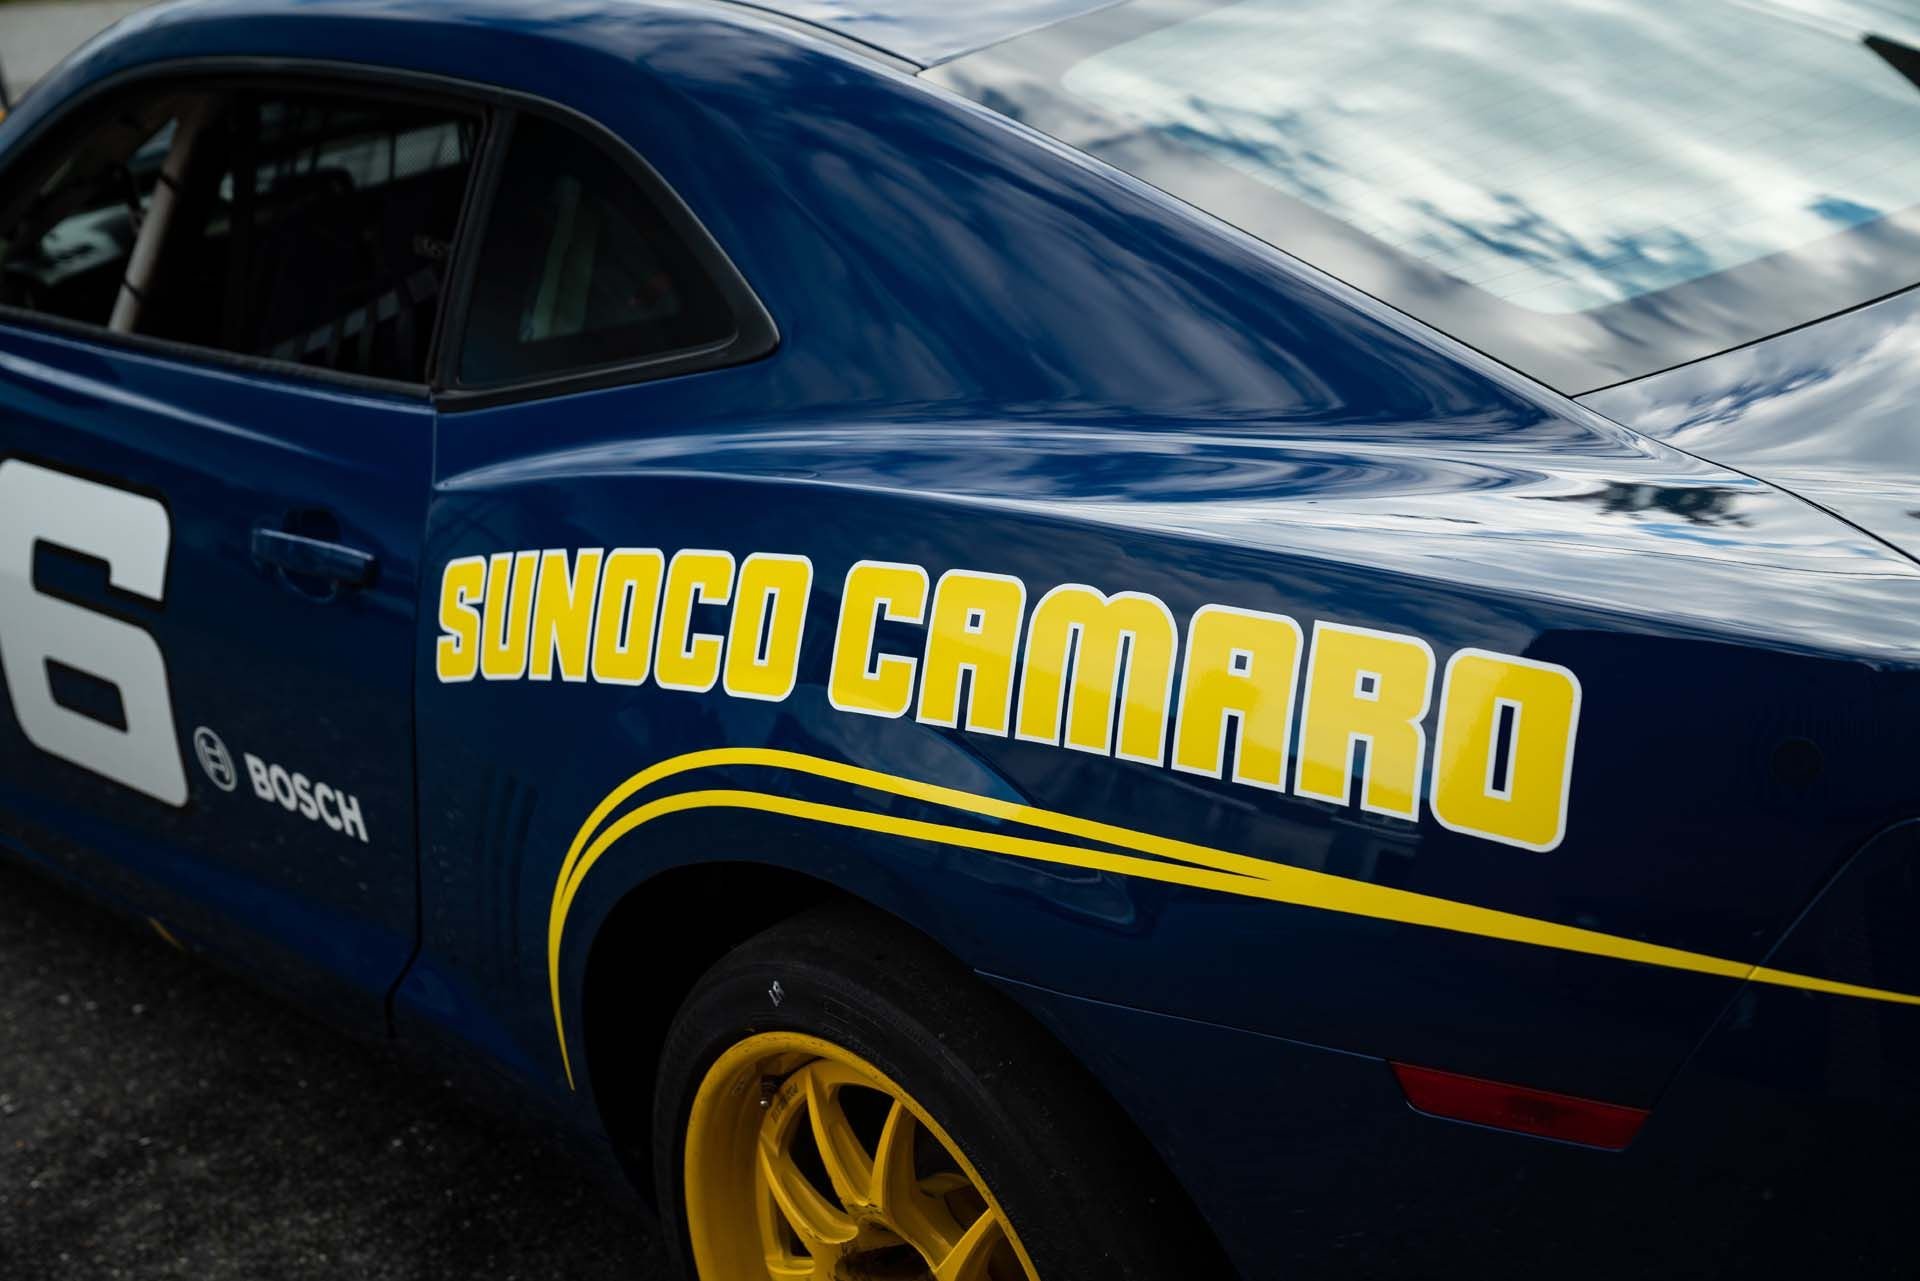 For Sale 2010 Chevrolet Camaro Sunoco Race Car